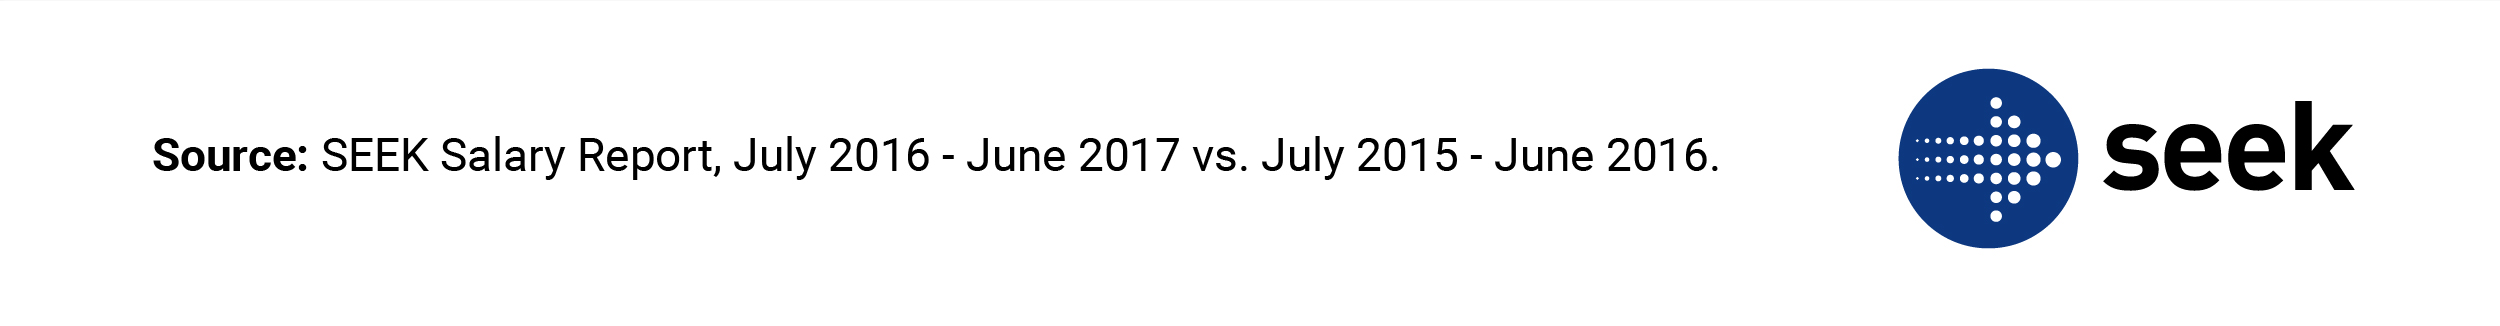 Seek Salary Report July 2016 - June 2017 vs July 2015 - June 2016.